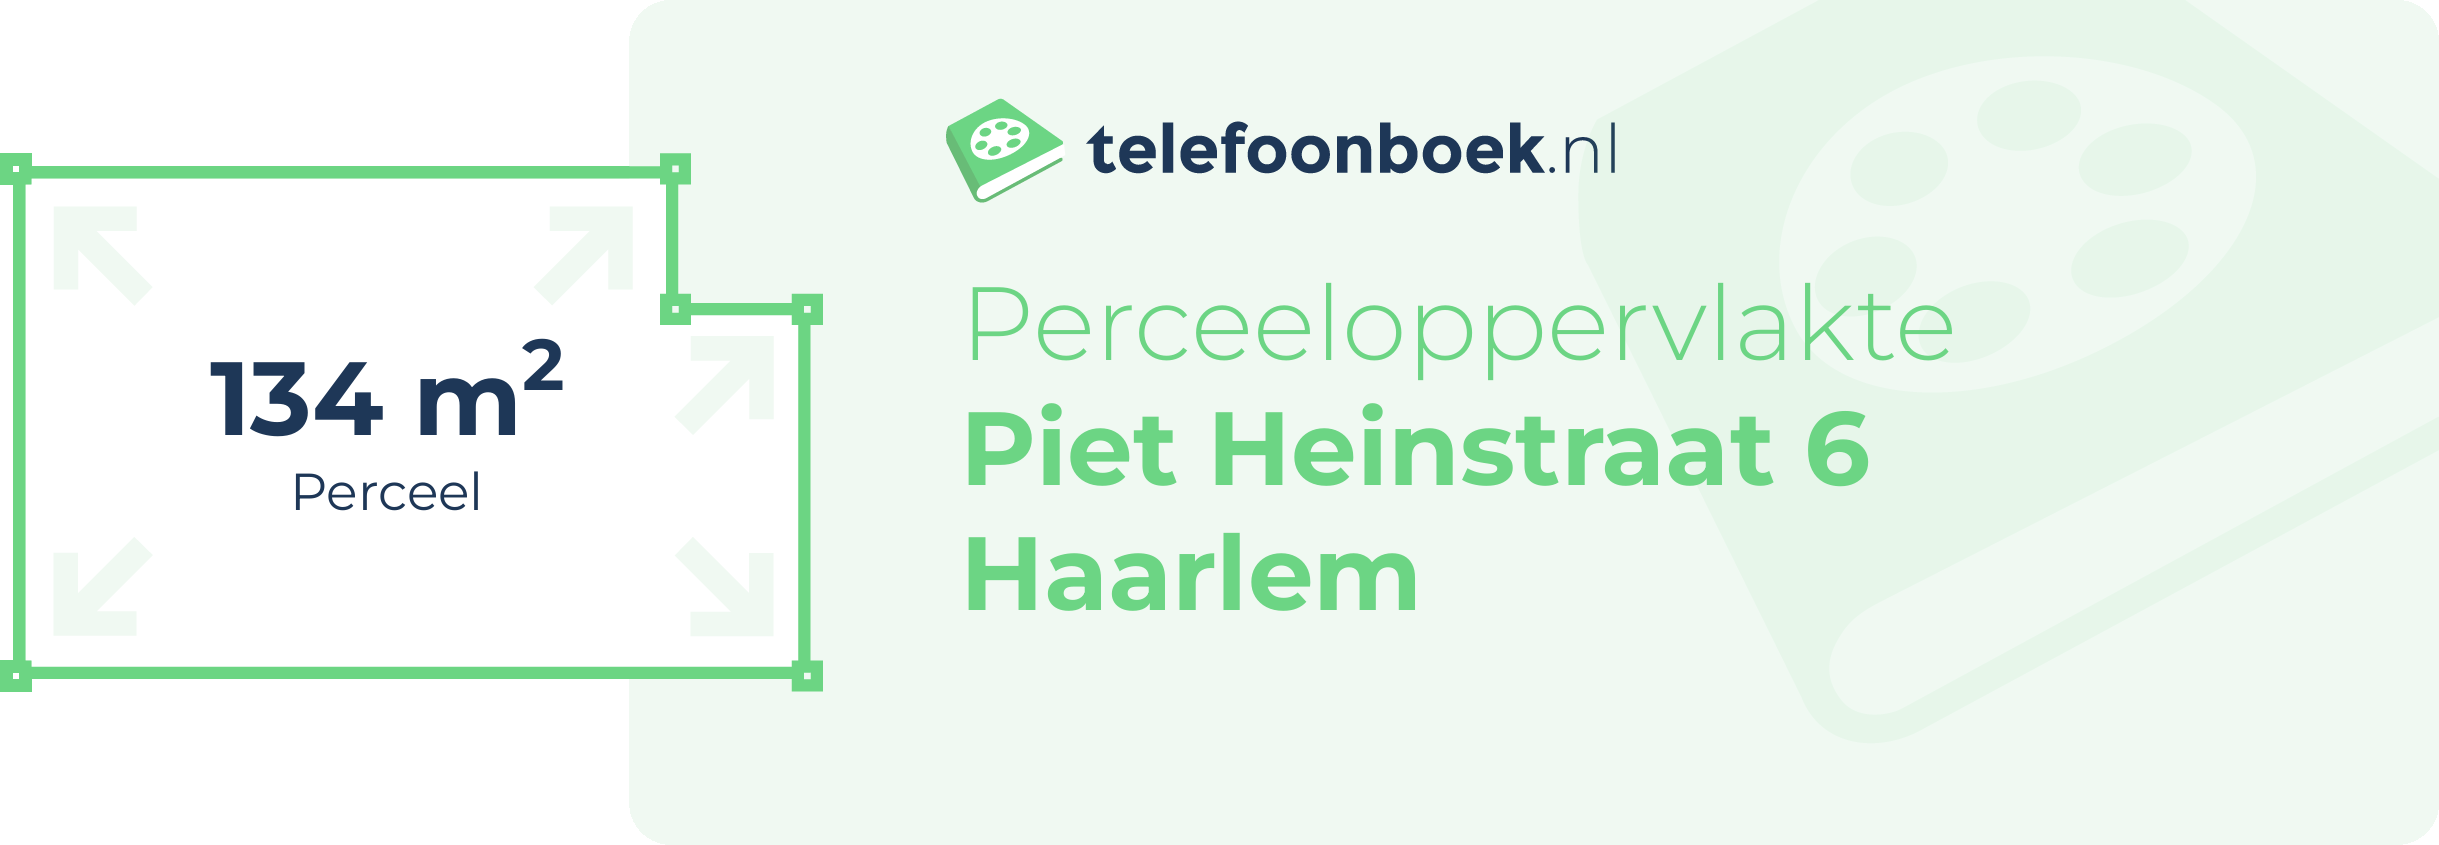 Perceeloppervlakte Piet Heinstraat 6 Haarlem